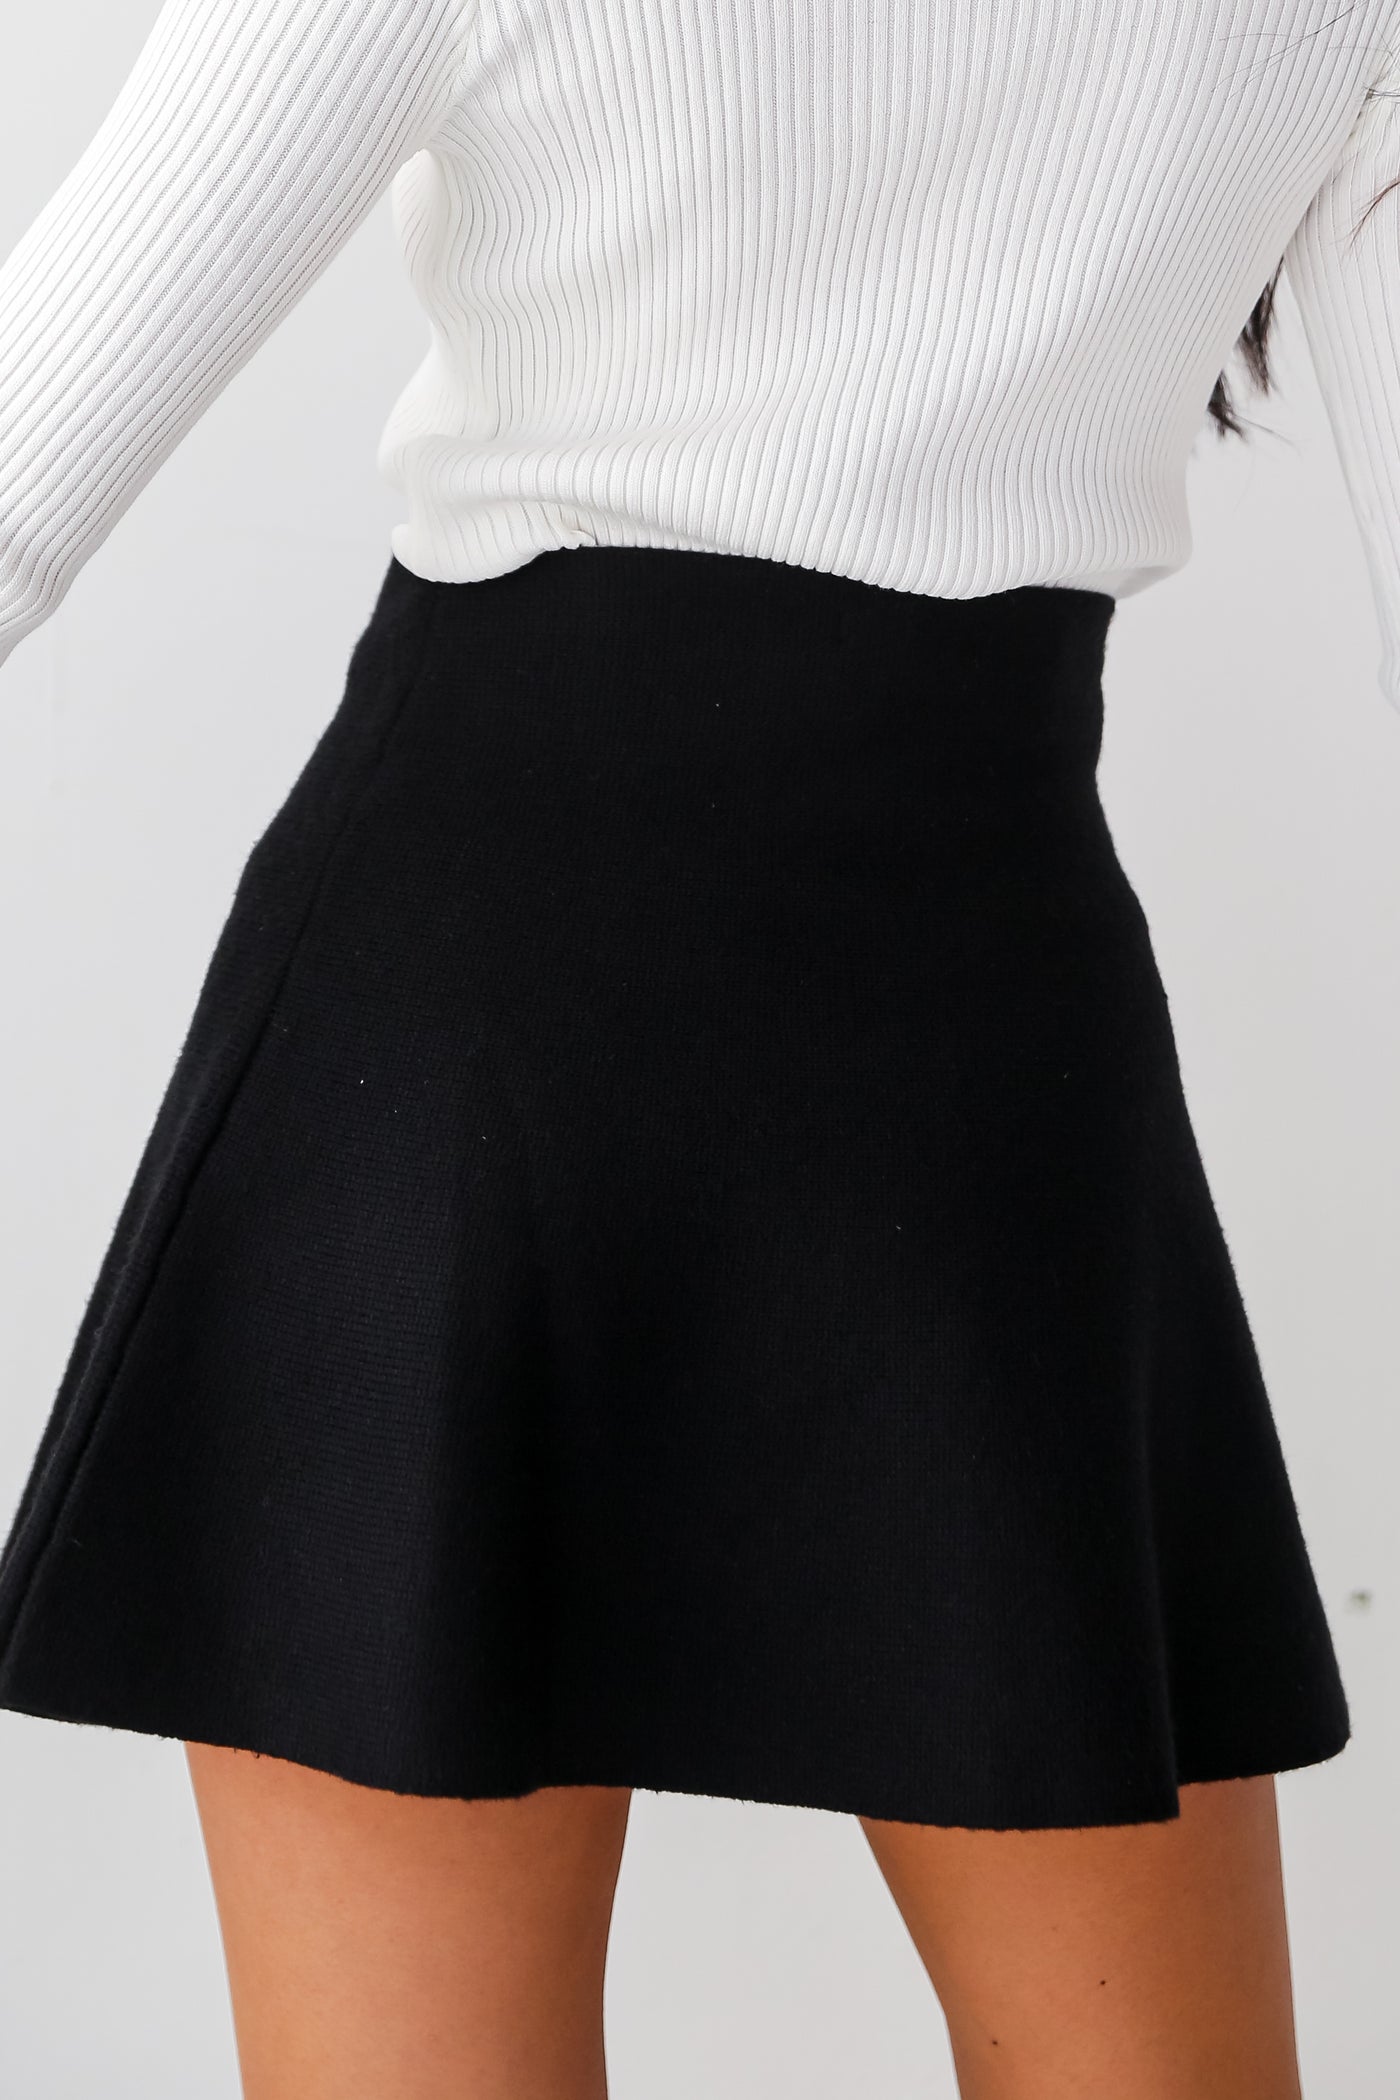 cute black sweater knit skirt